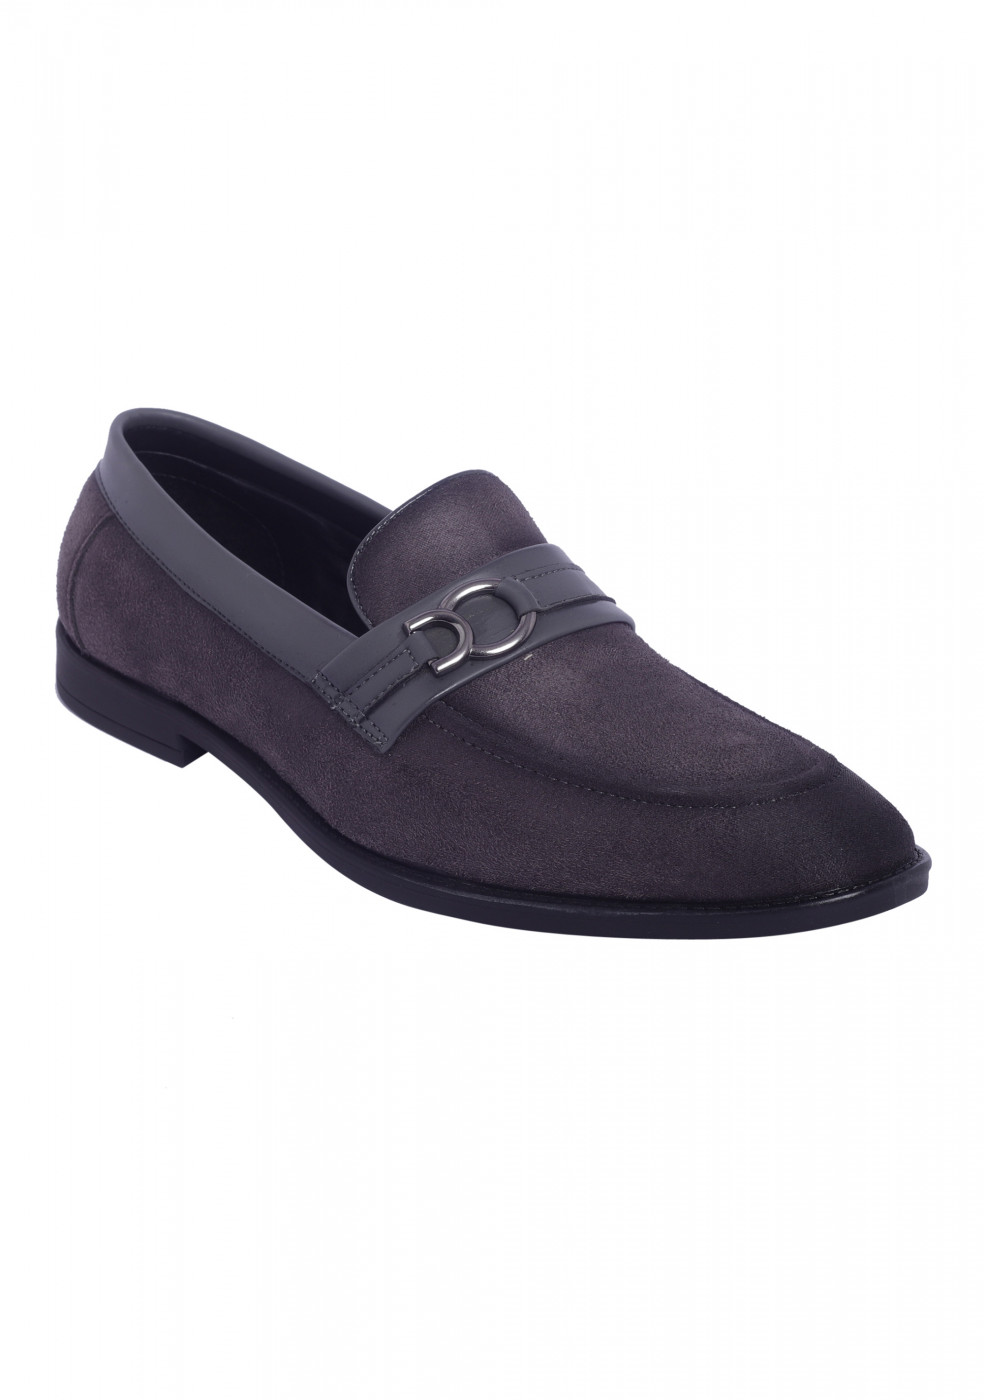 XSTOM Formal Gray Color Shoes For Men